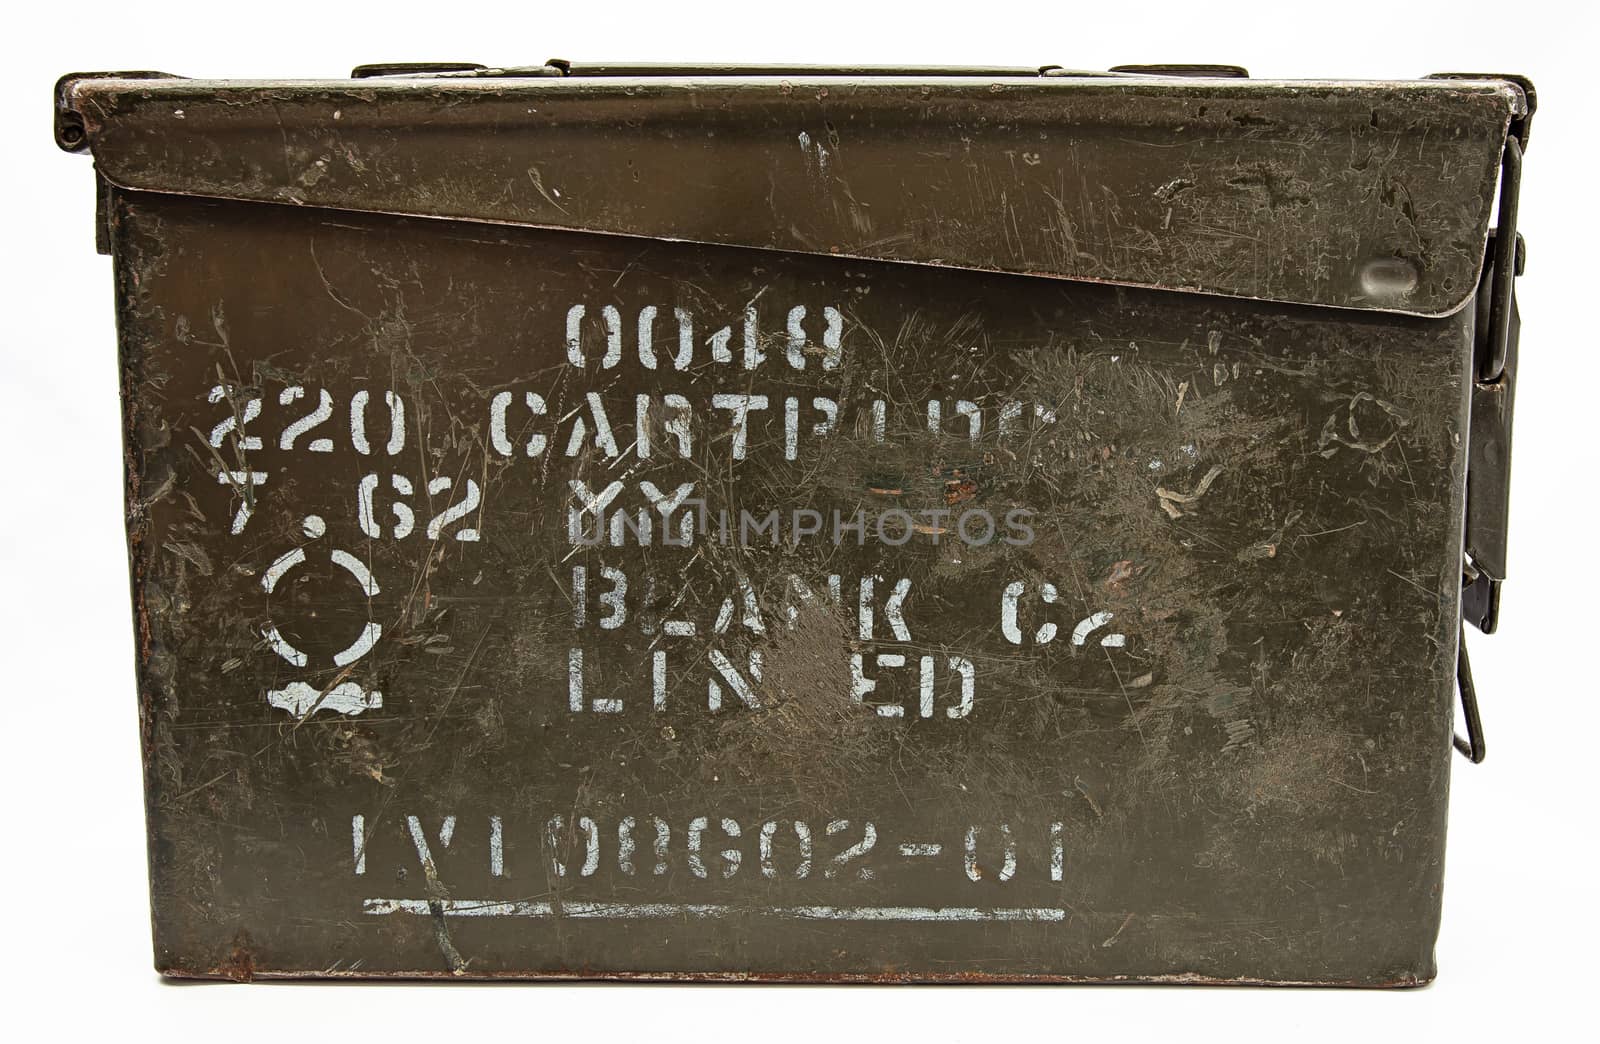 Vintage munitions box by mypstudio